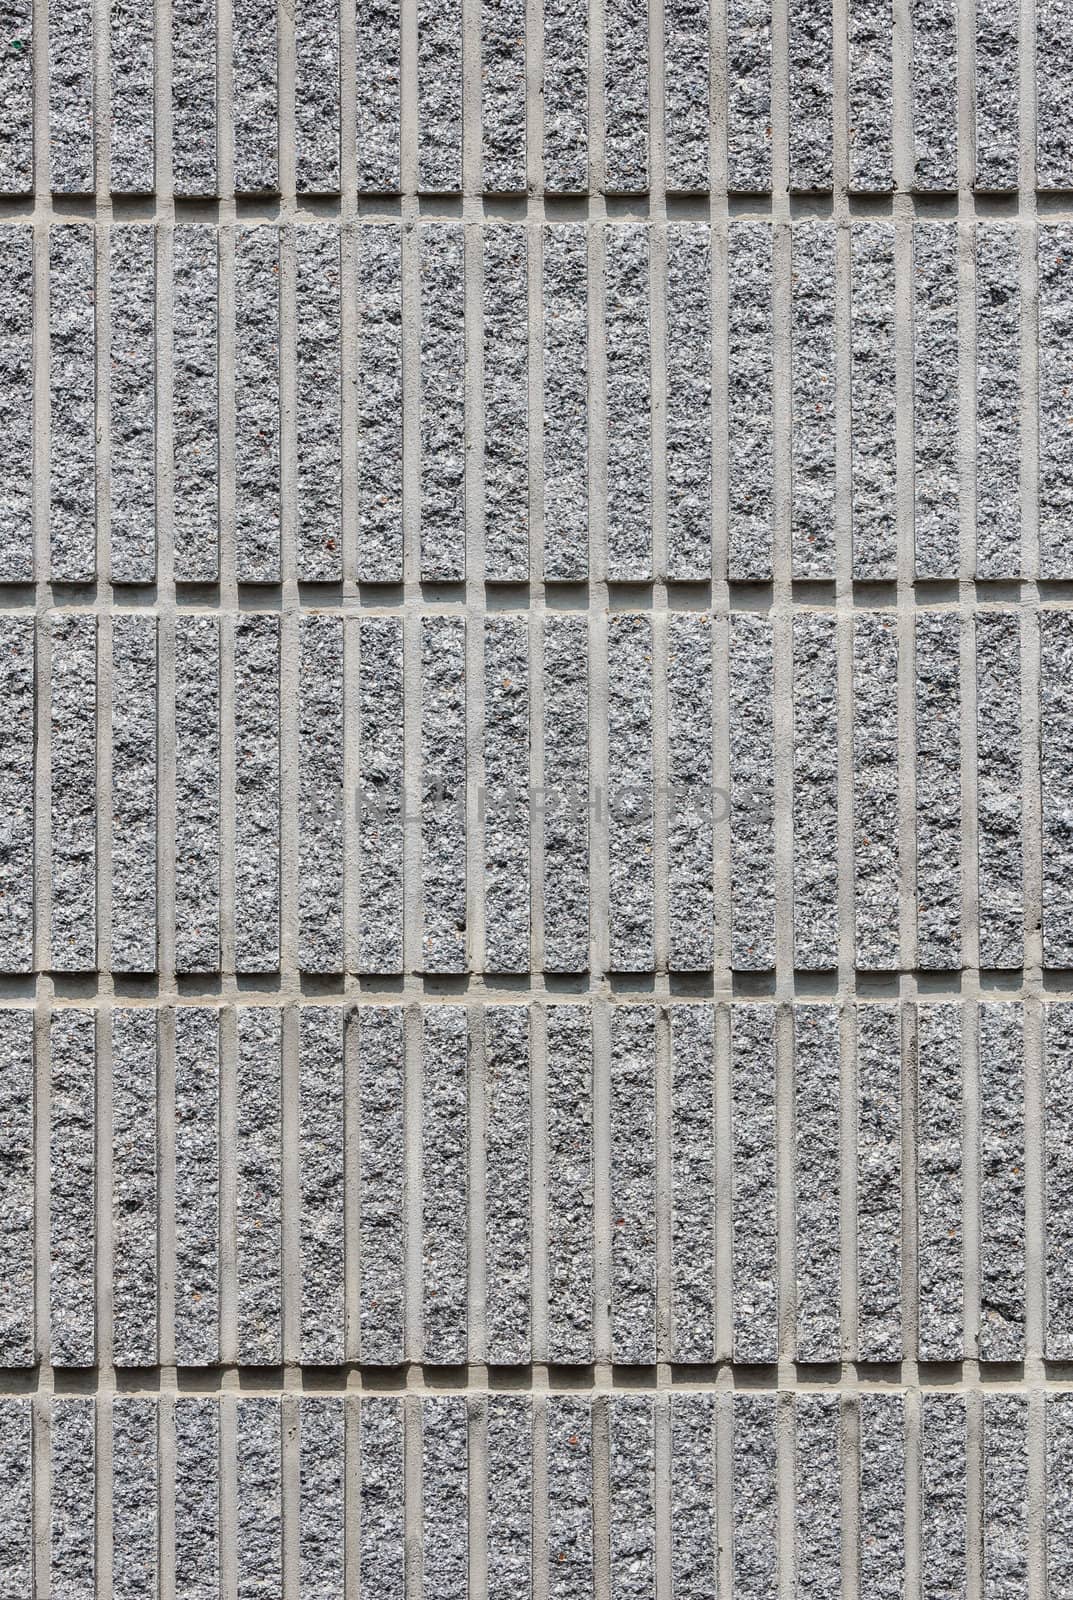 Corrugated Concrete Pattern Background by punpleng